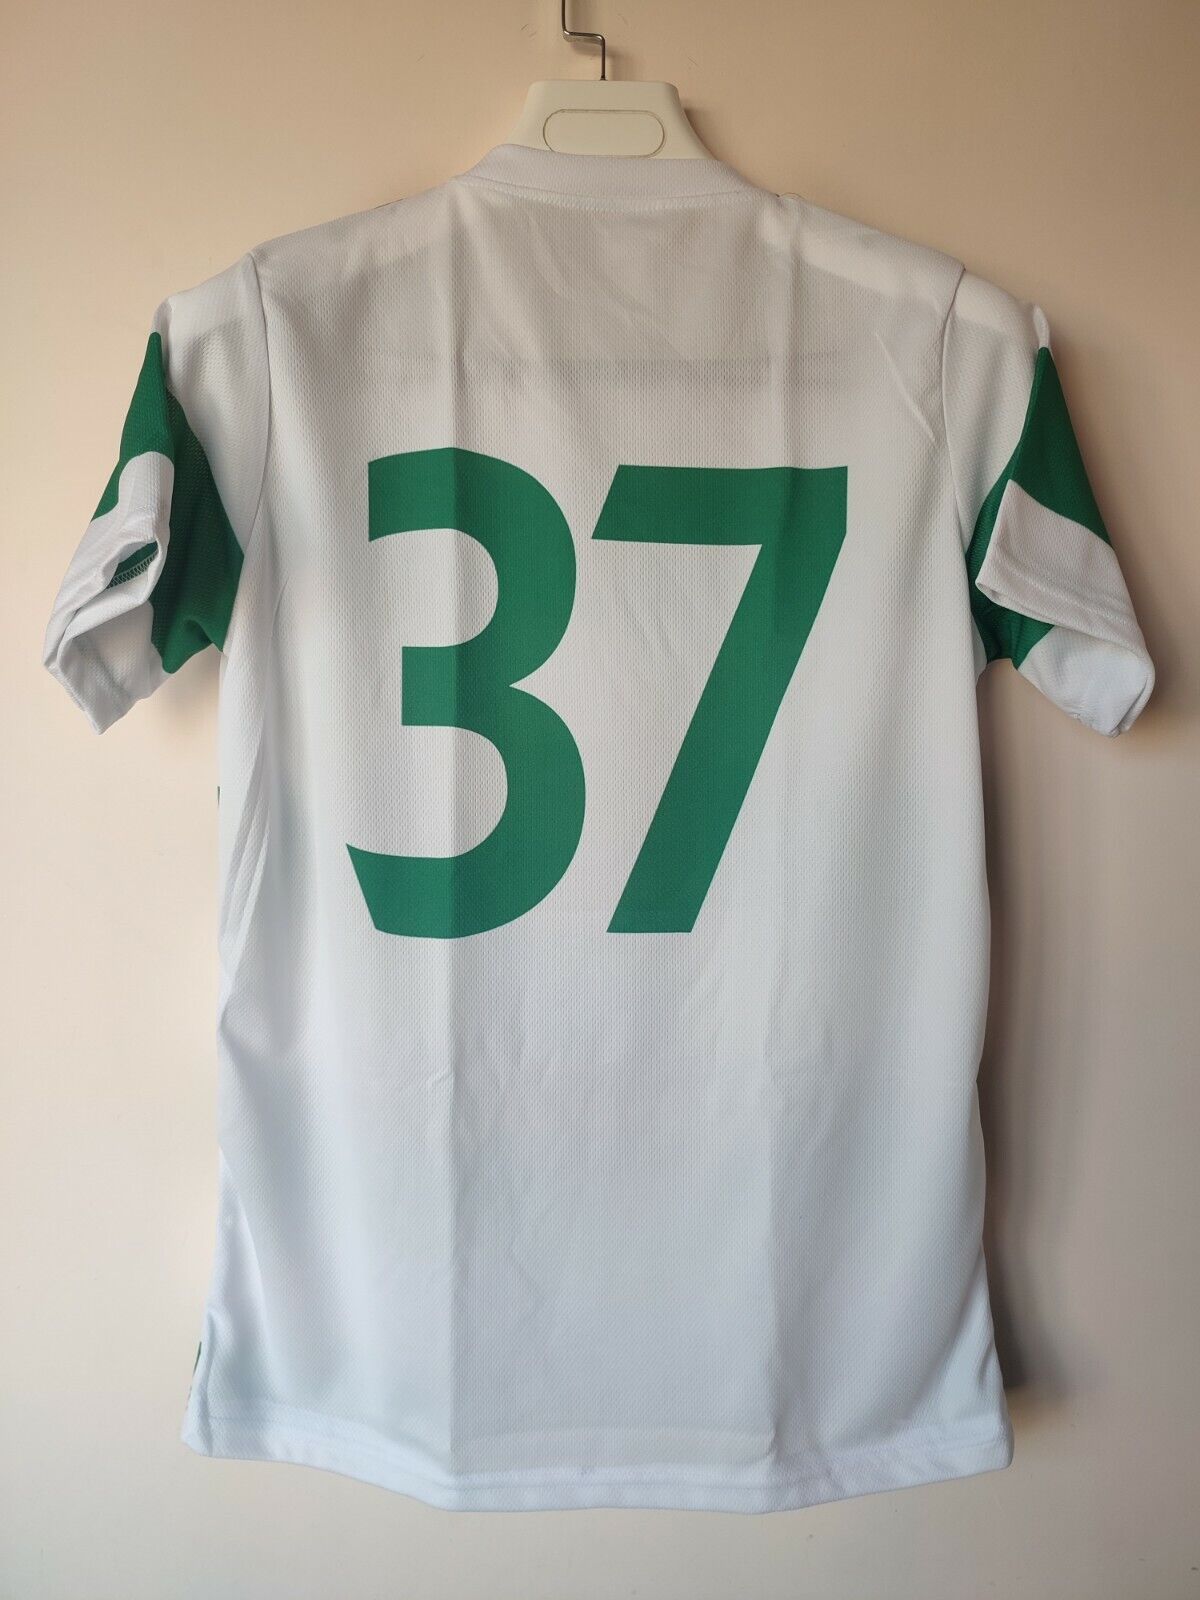 elegant Kleuterschool Mentor Sporting Clube Cabinda Angola match issue soccer jersey trikot camiseta  maillot | eBay